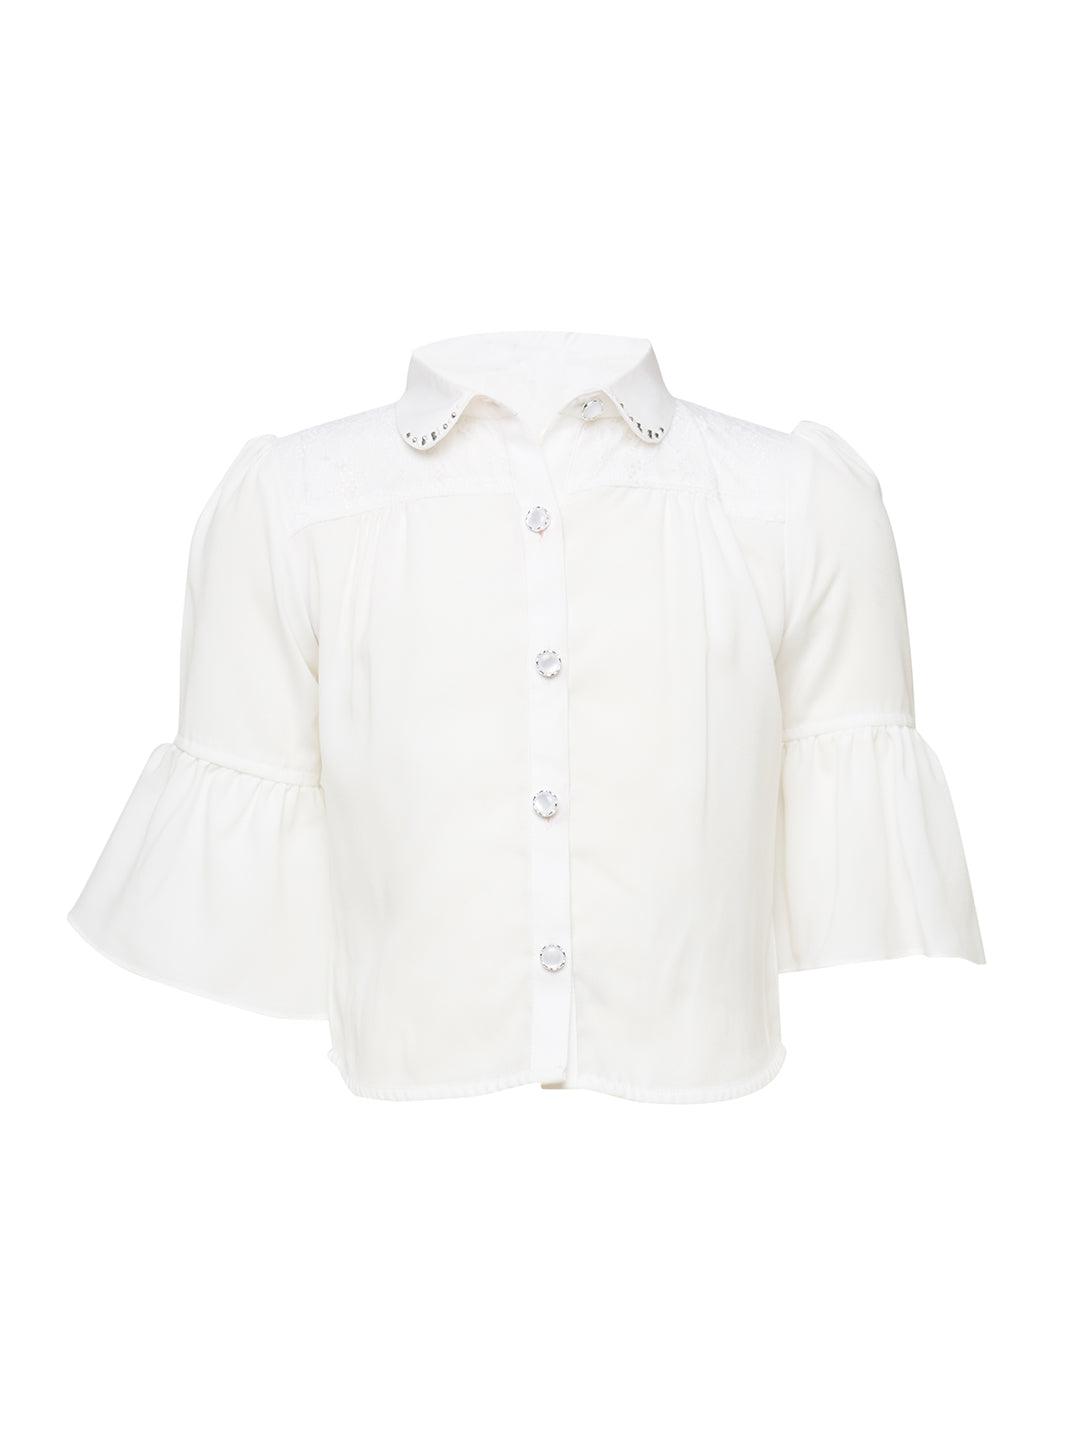 Printed Black & White Shirt Top Set - 1792-Cream - TINY BABY INDIA shop.tinybaby.in